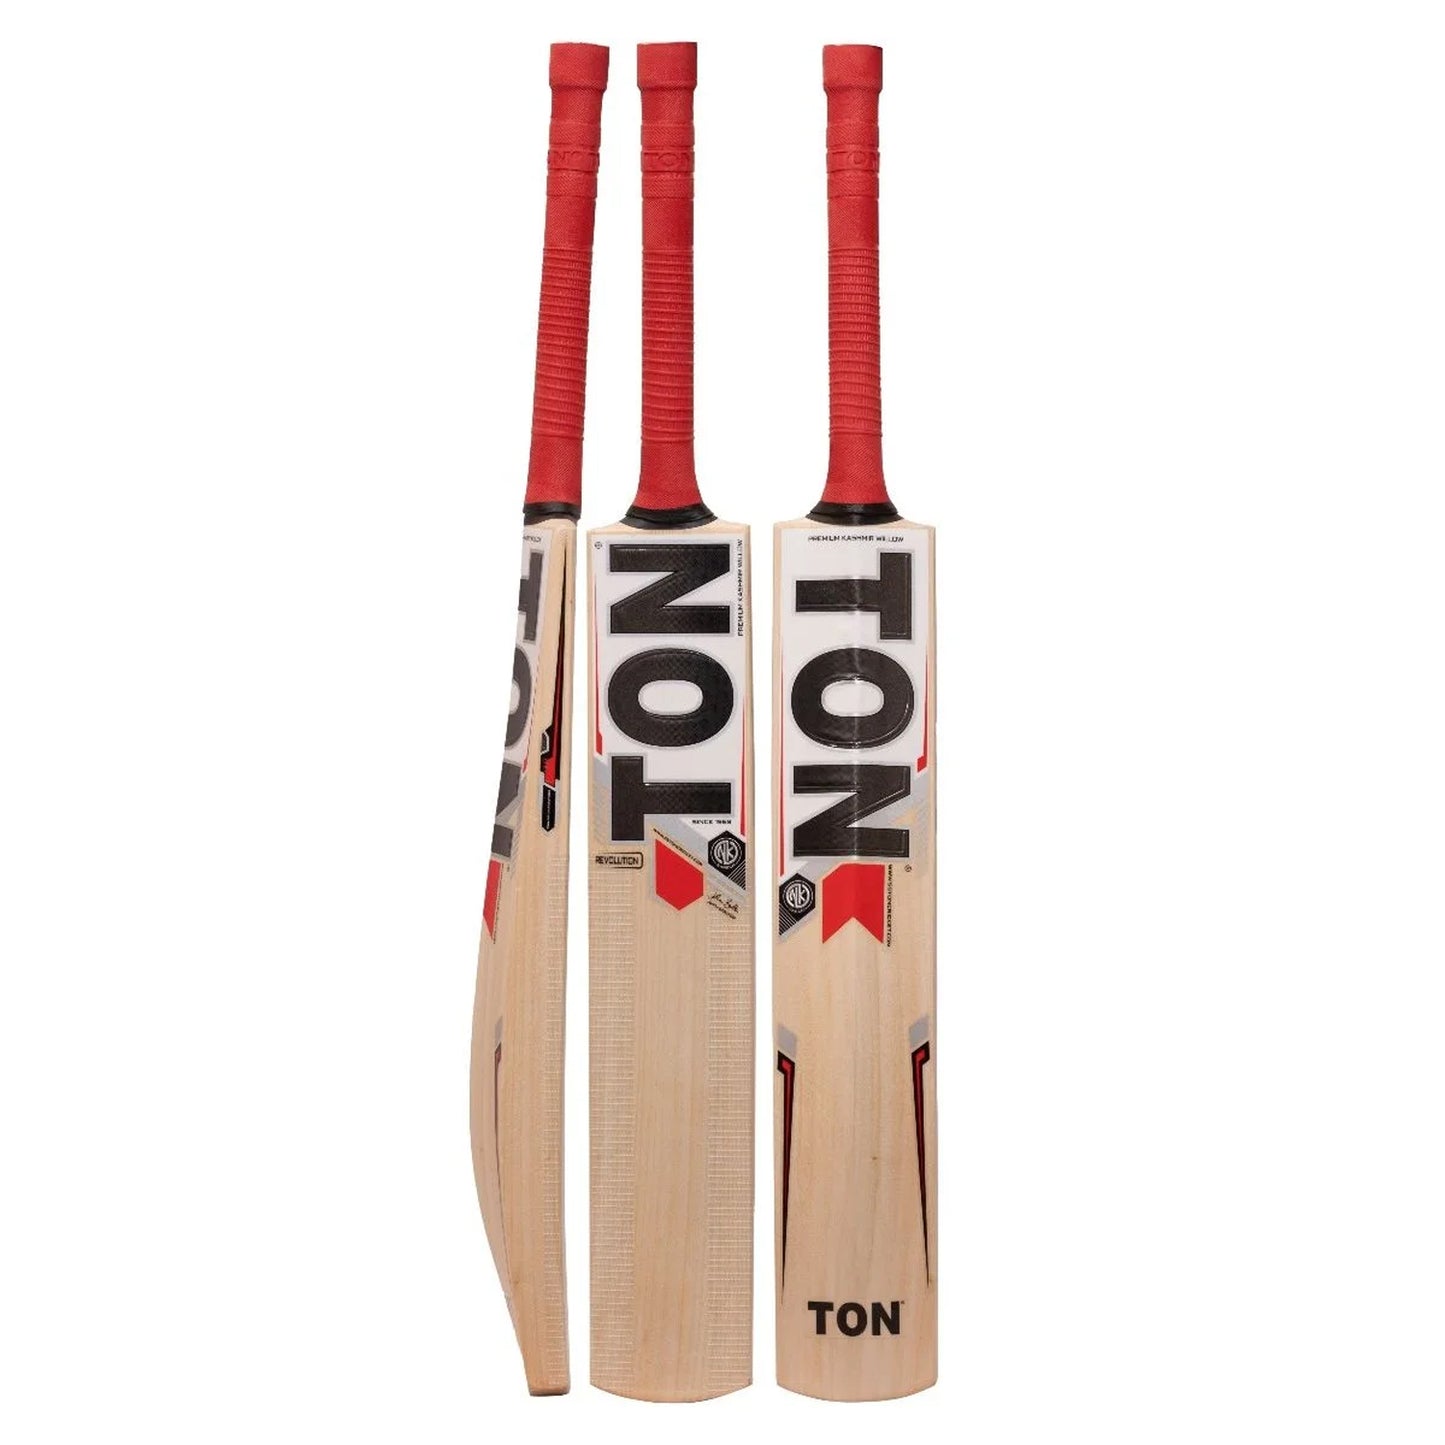 SS Ton Revolution Kashmir Willow Cricket Bat - Best Price online Prokicksports.com